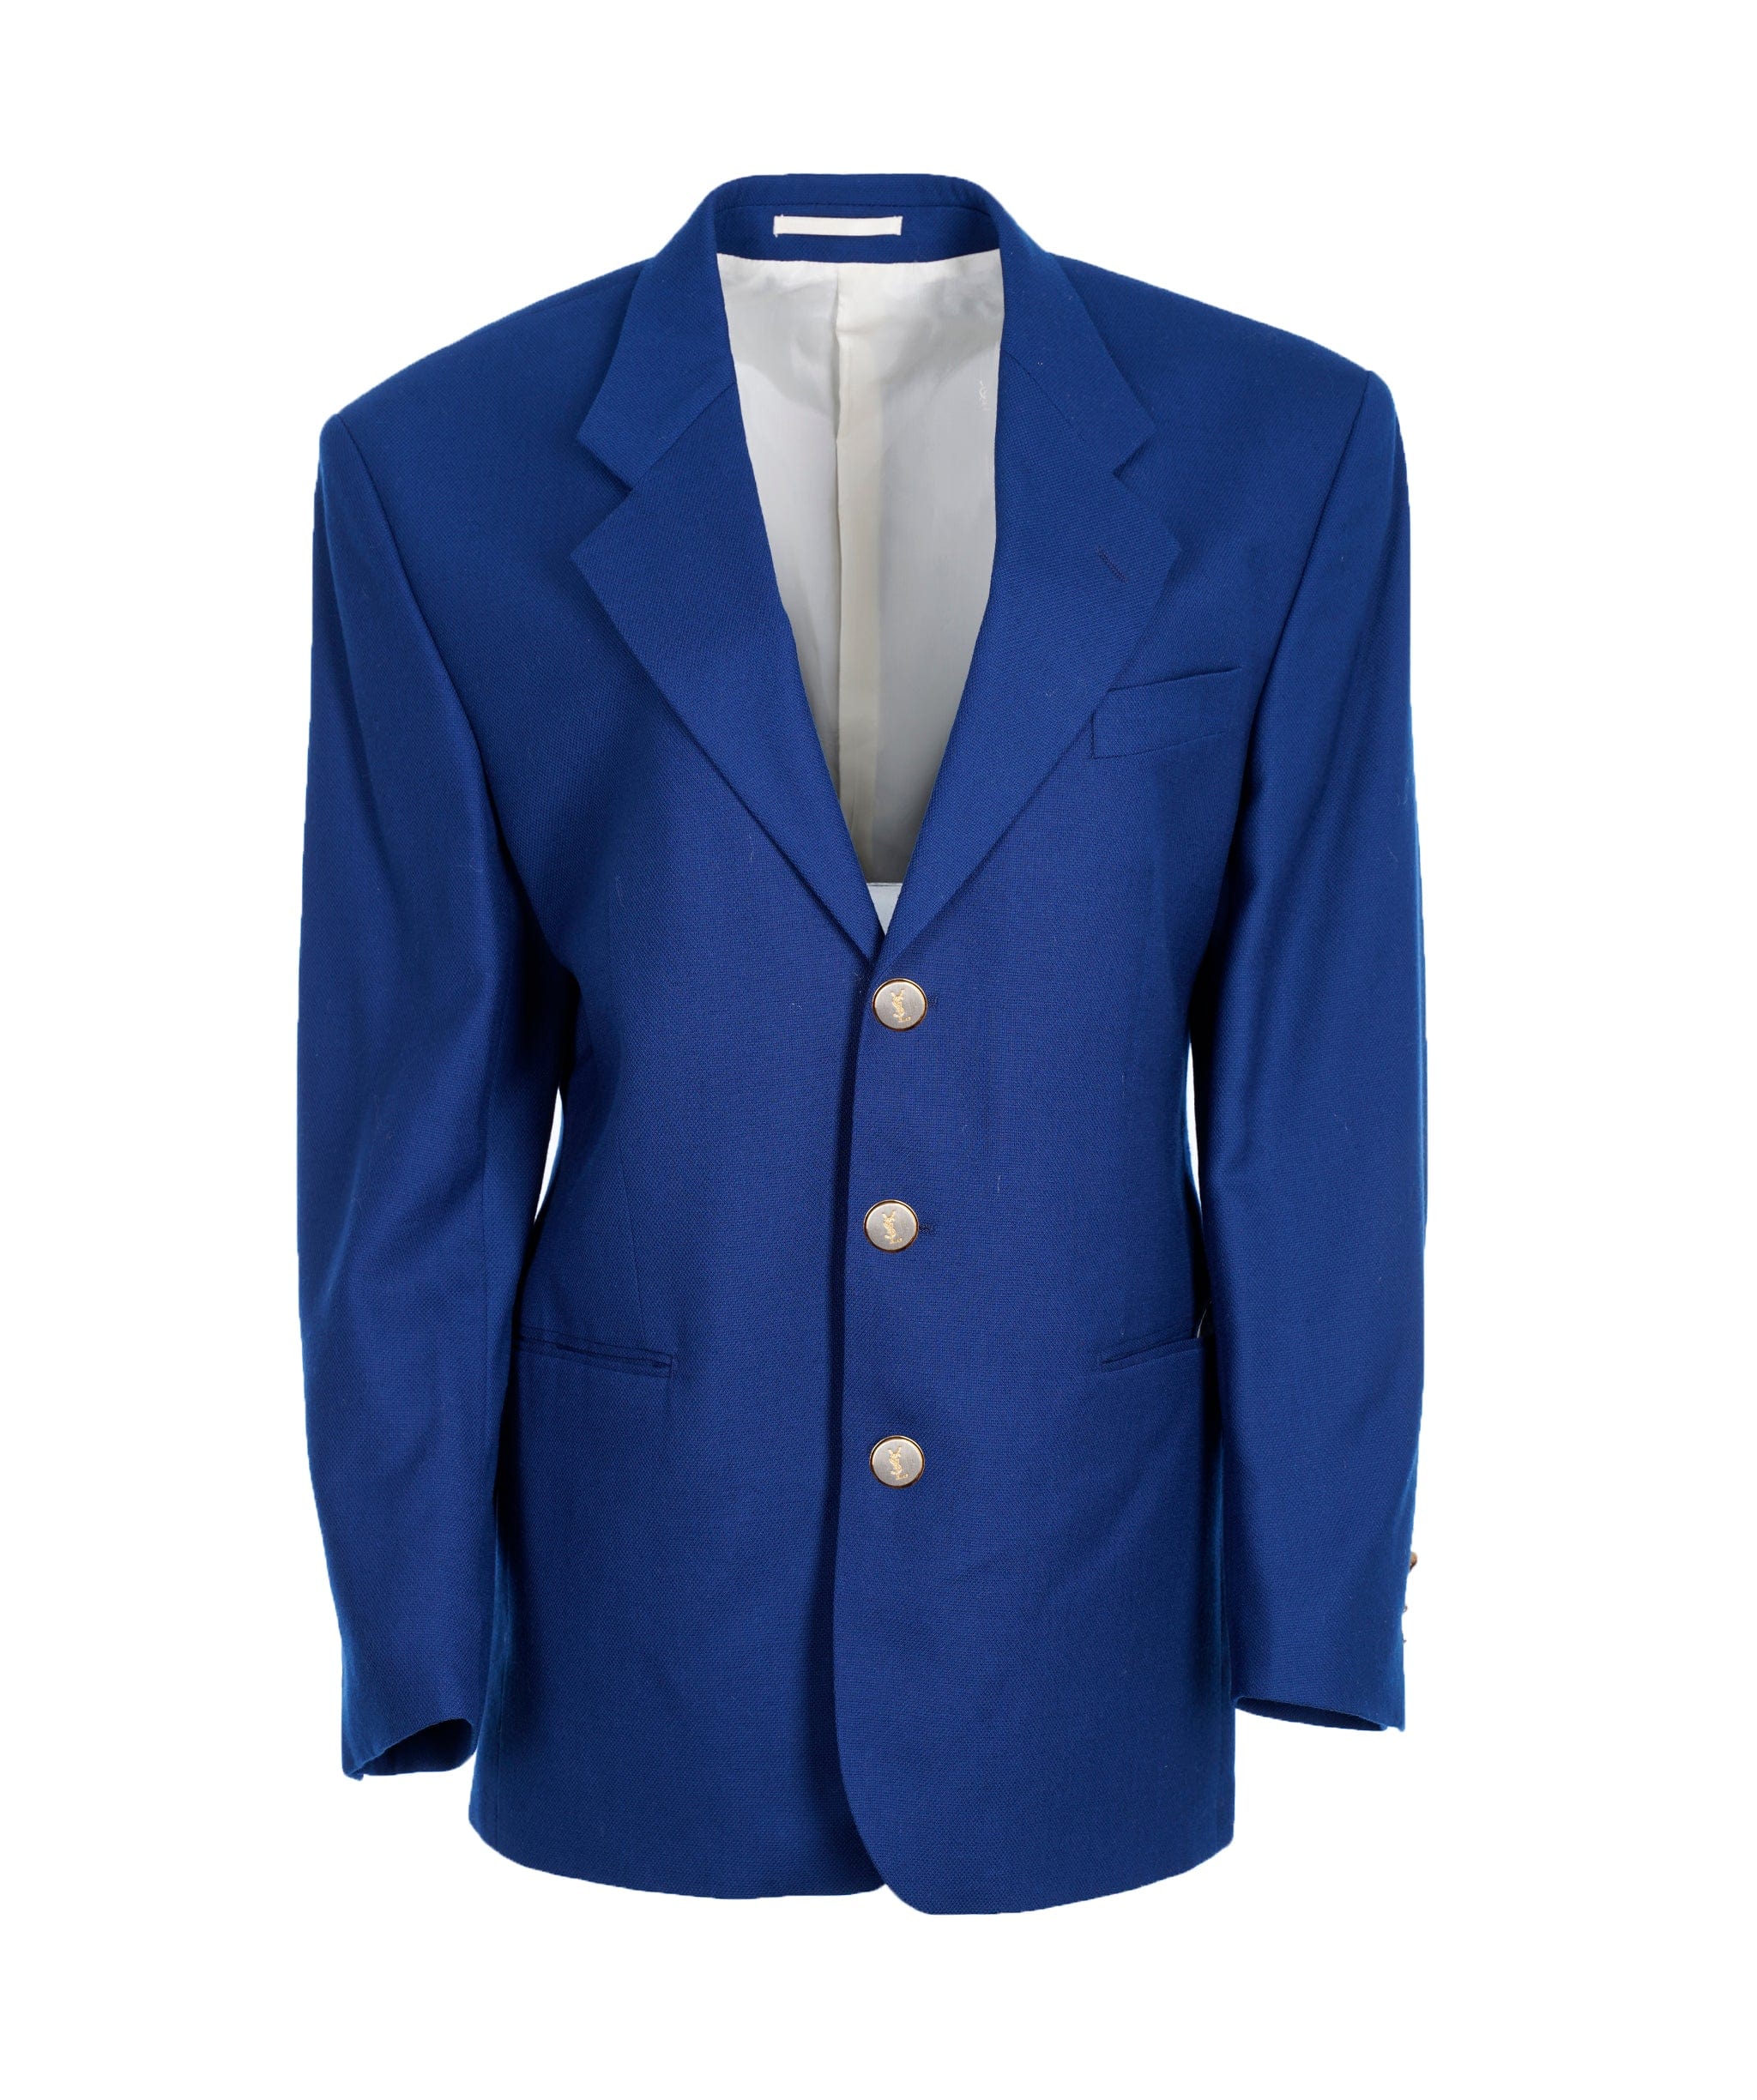 Yves Saint Laurent YSL vintage blue blazer with gold buttons - AJC0500